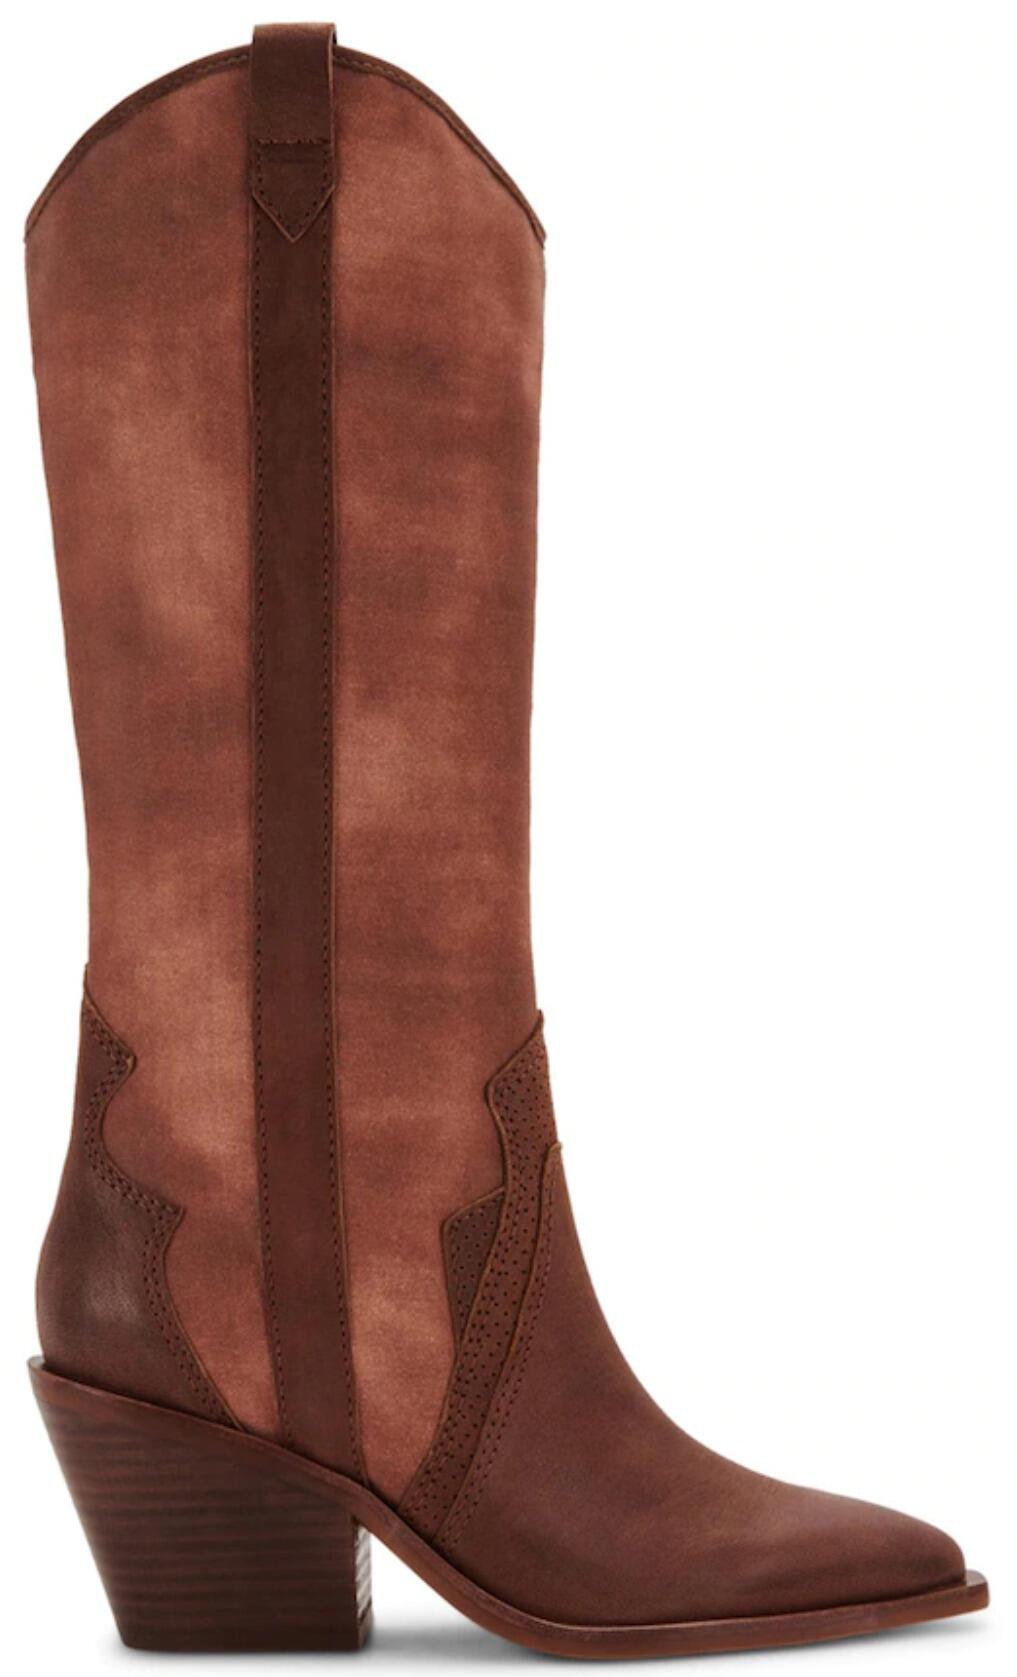 Navene Boots (Chocolate Leather) | style